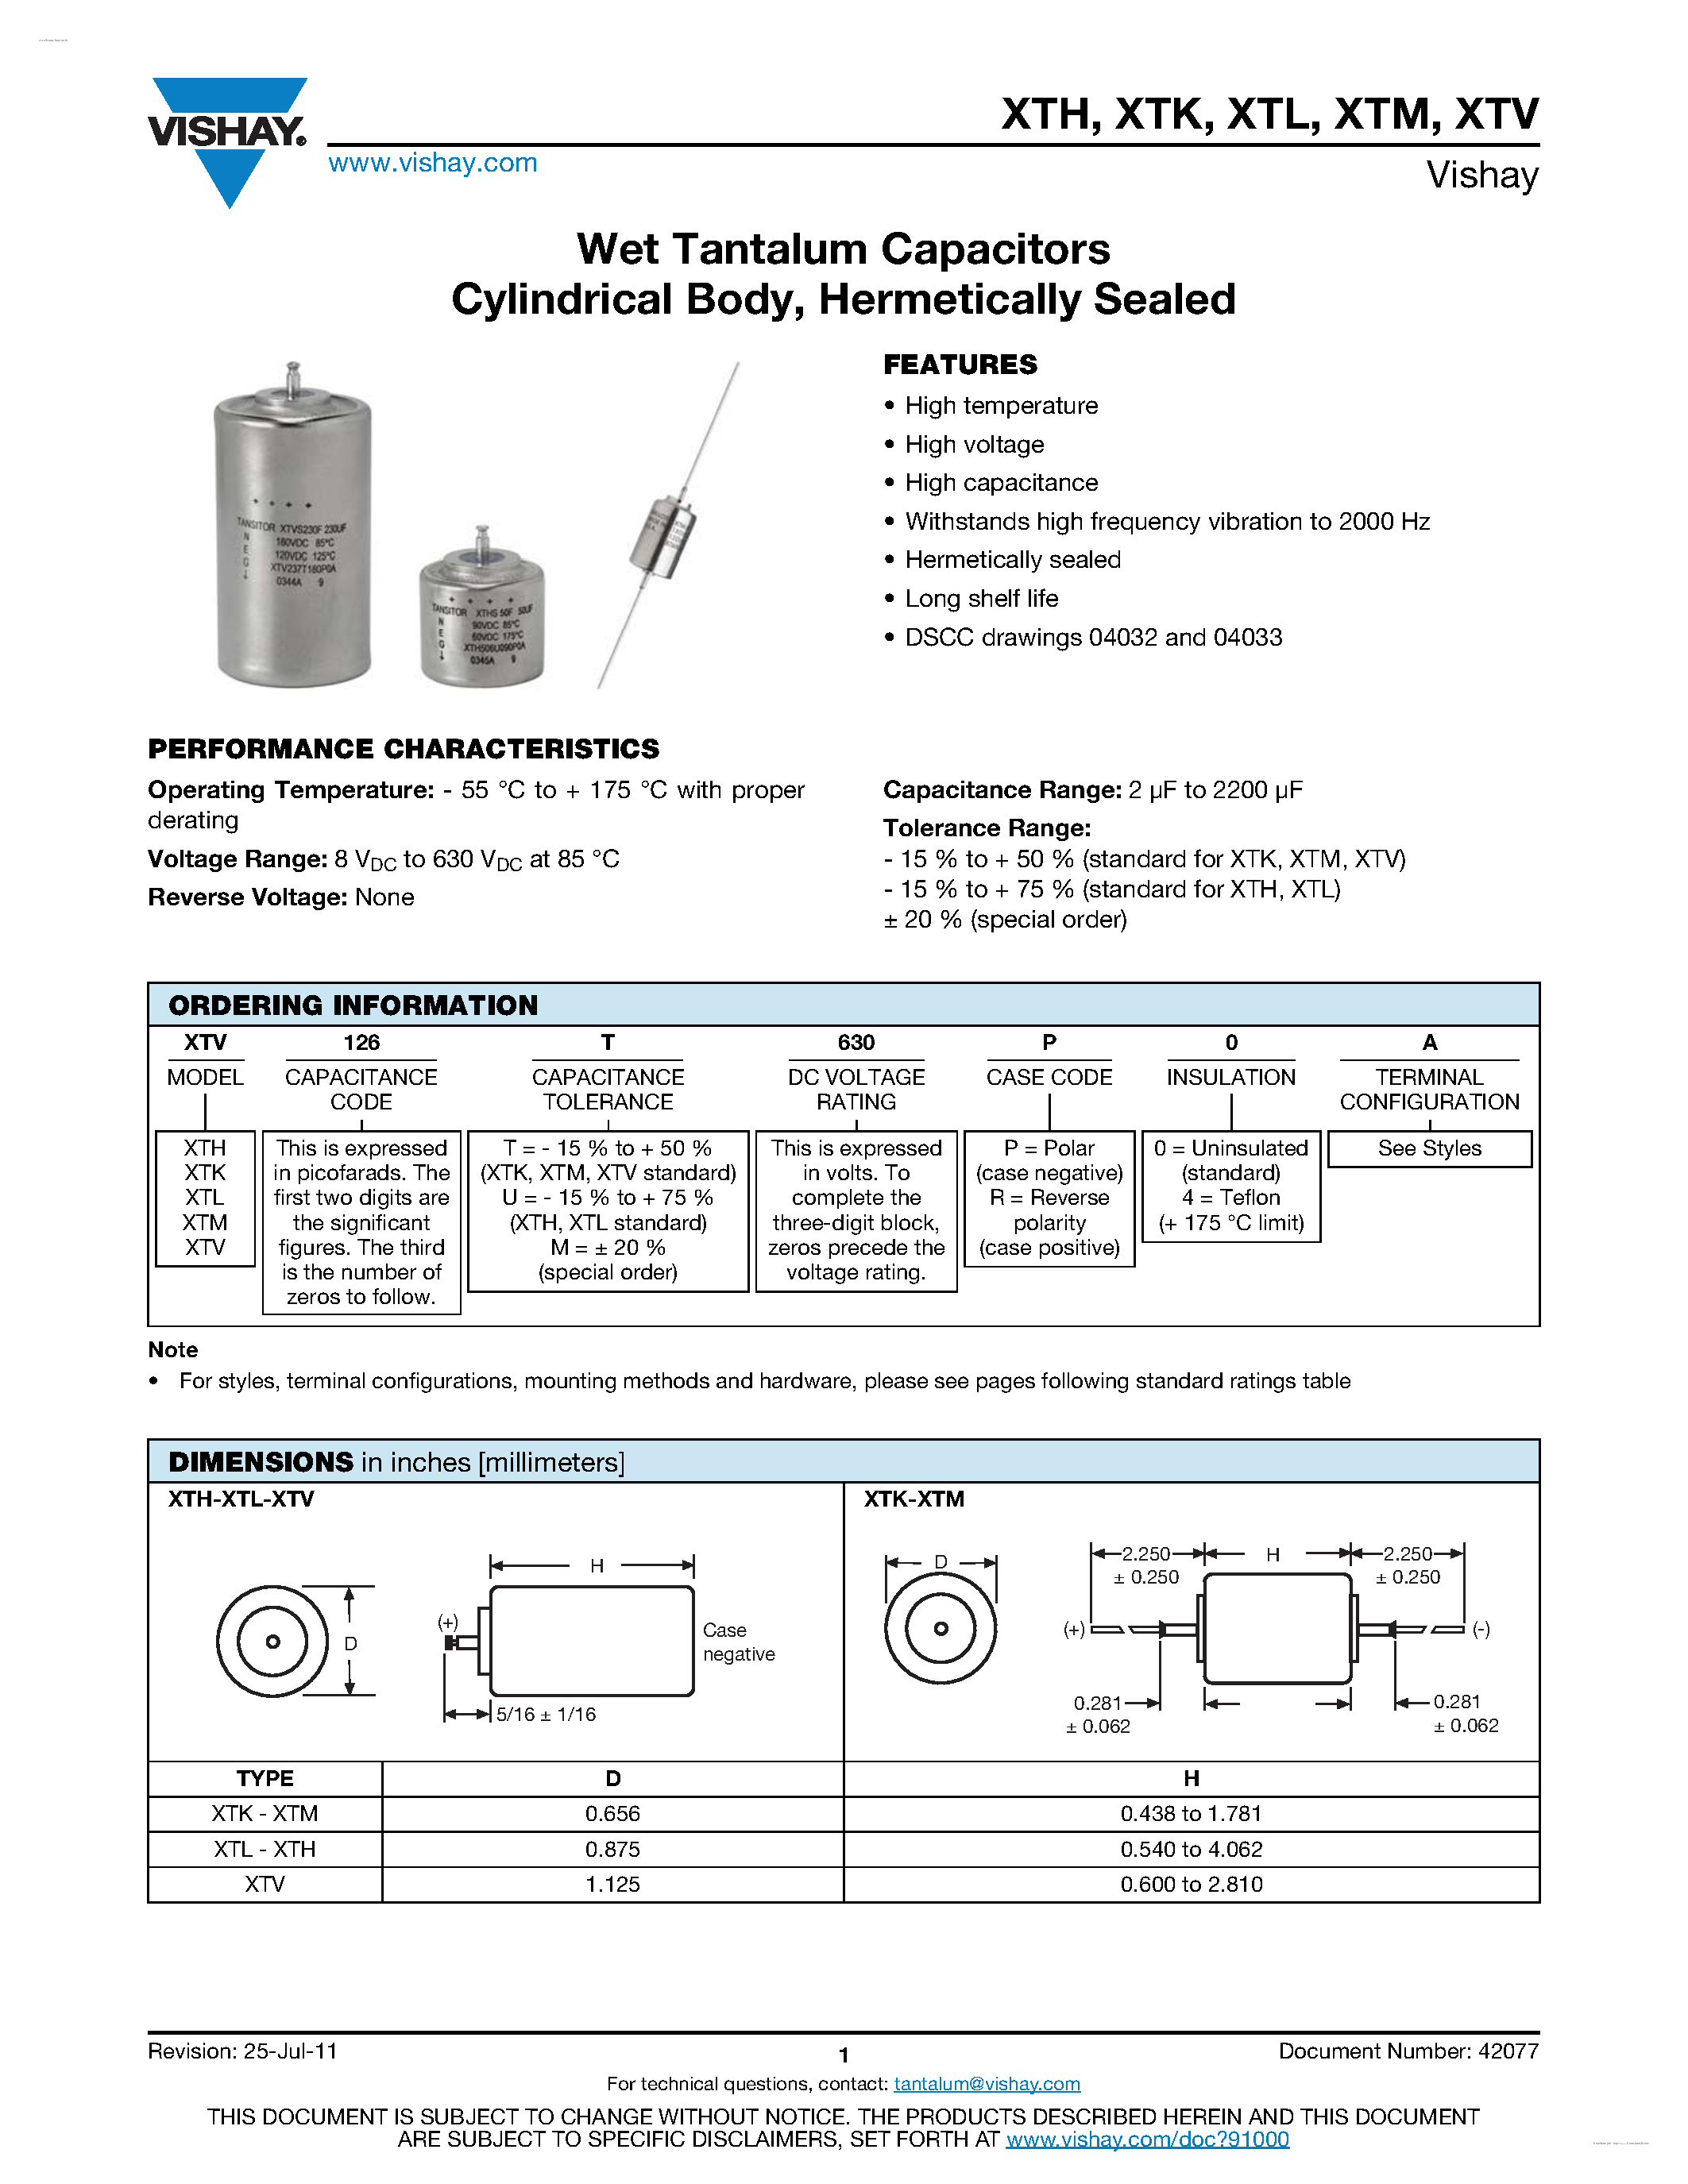 Datasheet XTH - Wet Tantalum Capacitors page 1